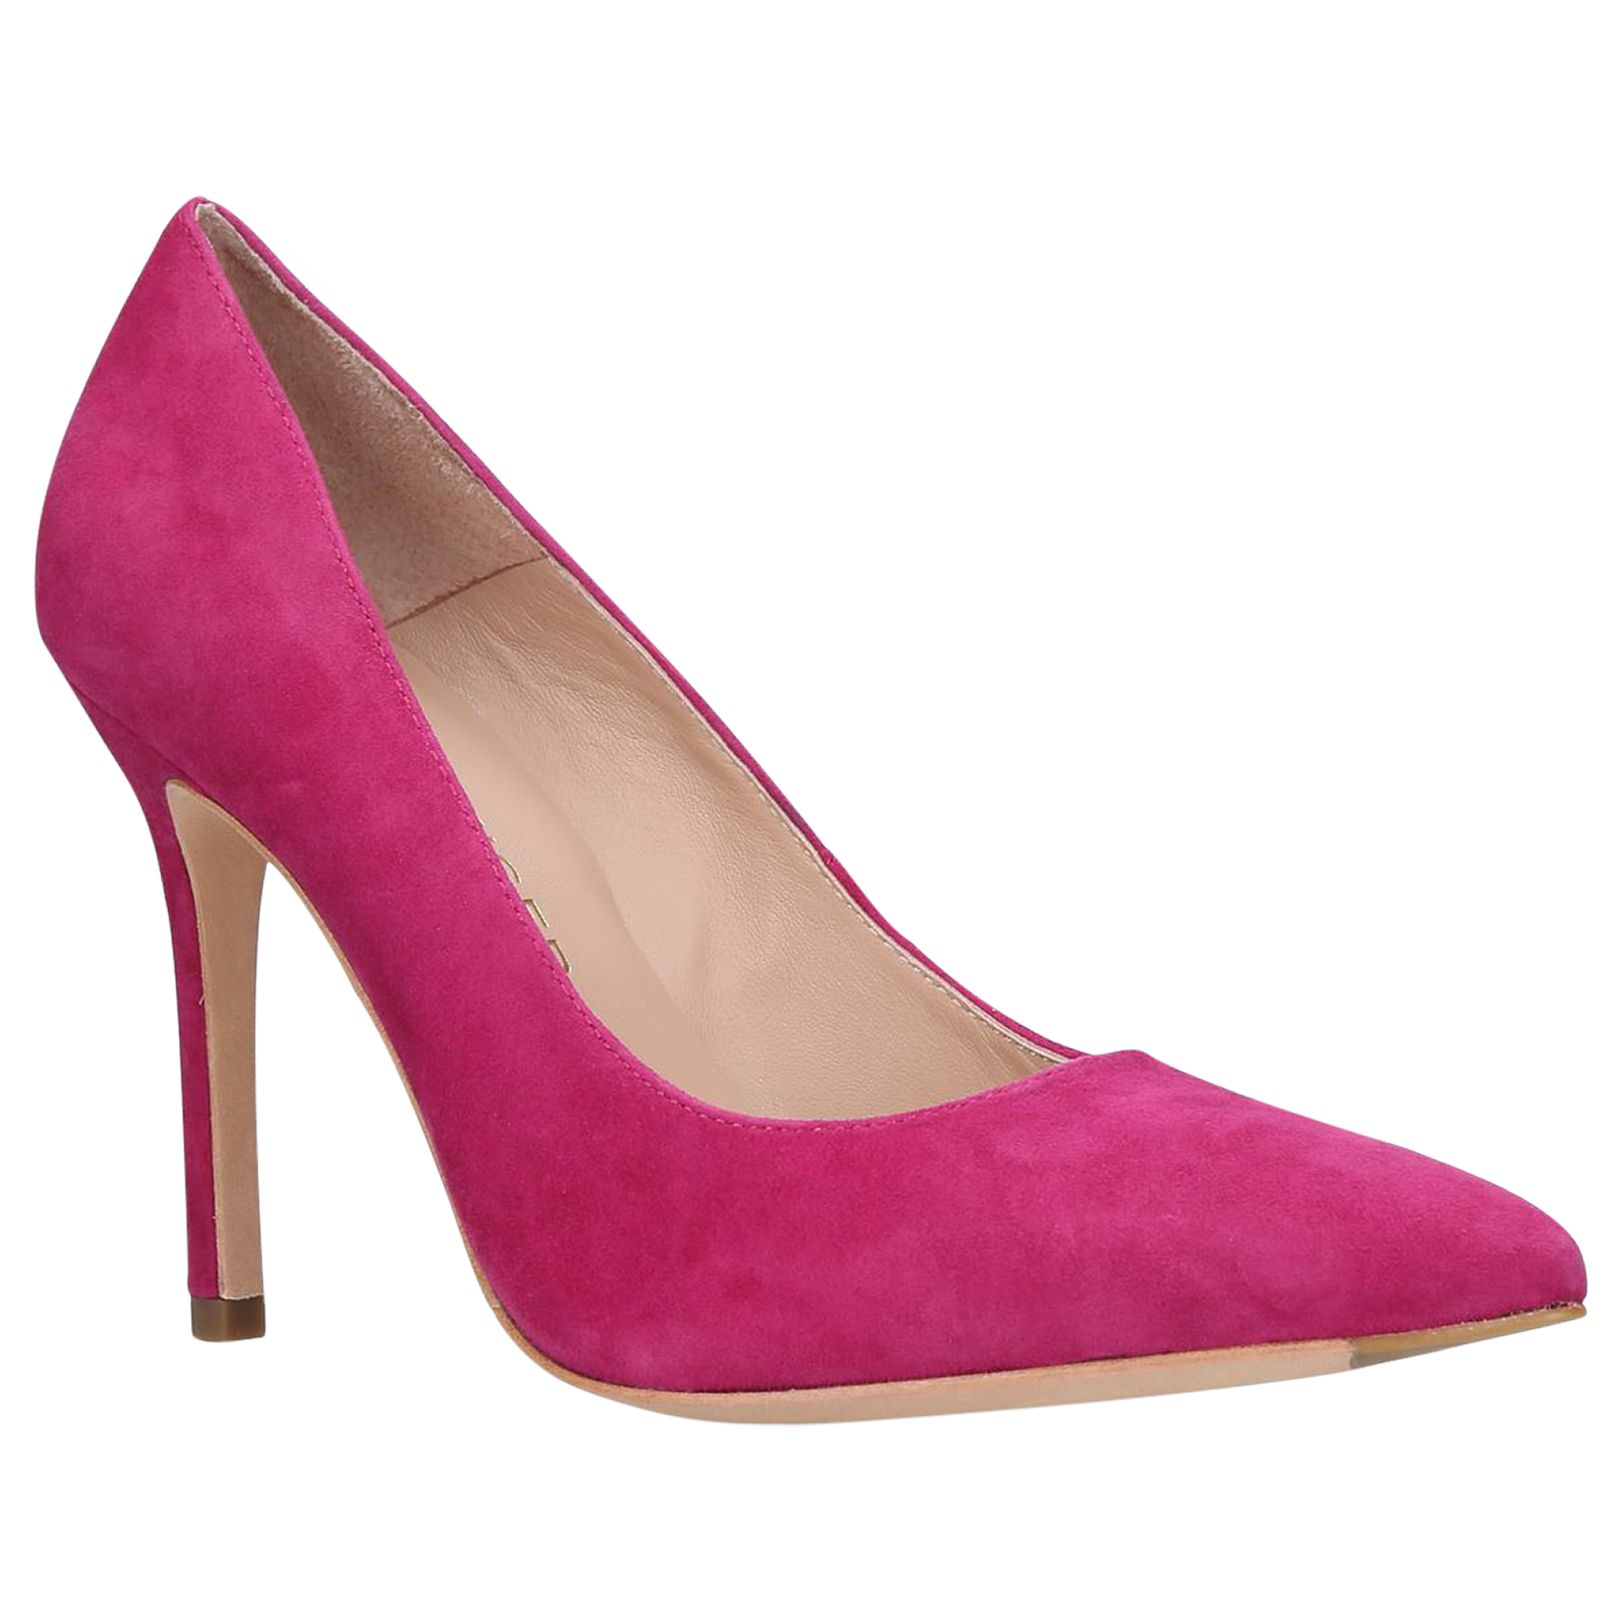 Kurt Geiger London Brompton High Heel Court Shoes, Pink Suede at John ...